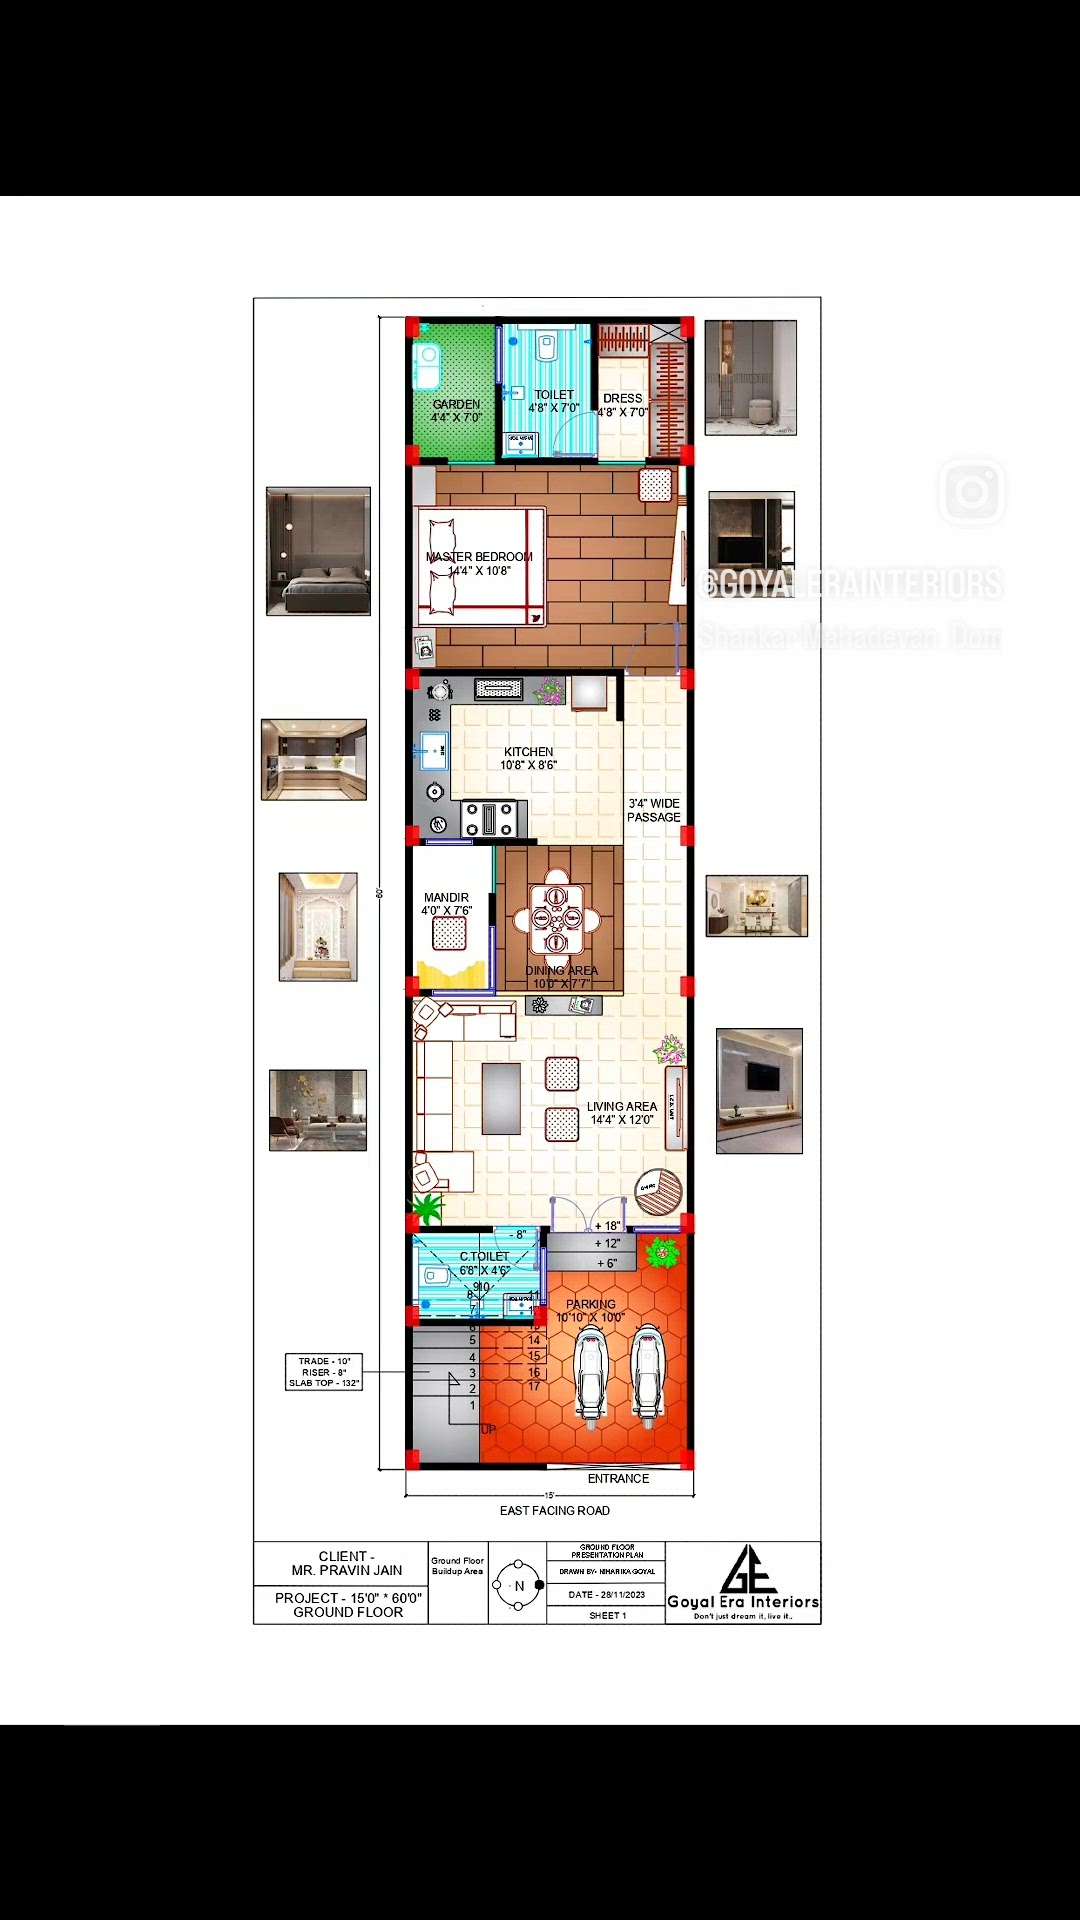 #ProposedResidentialProject  #gandhinagar  #indorecity  #floorplanpresentation  #upcomingproject  #moretogo  #15x60floorplan  #followformoreposts  #dmtobook  #belledreamers🏡  #goyalerainteriors🏡